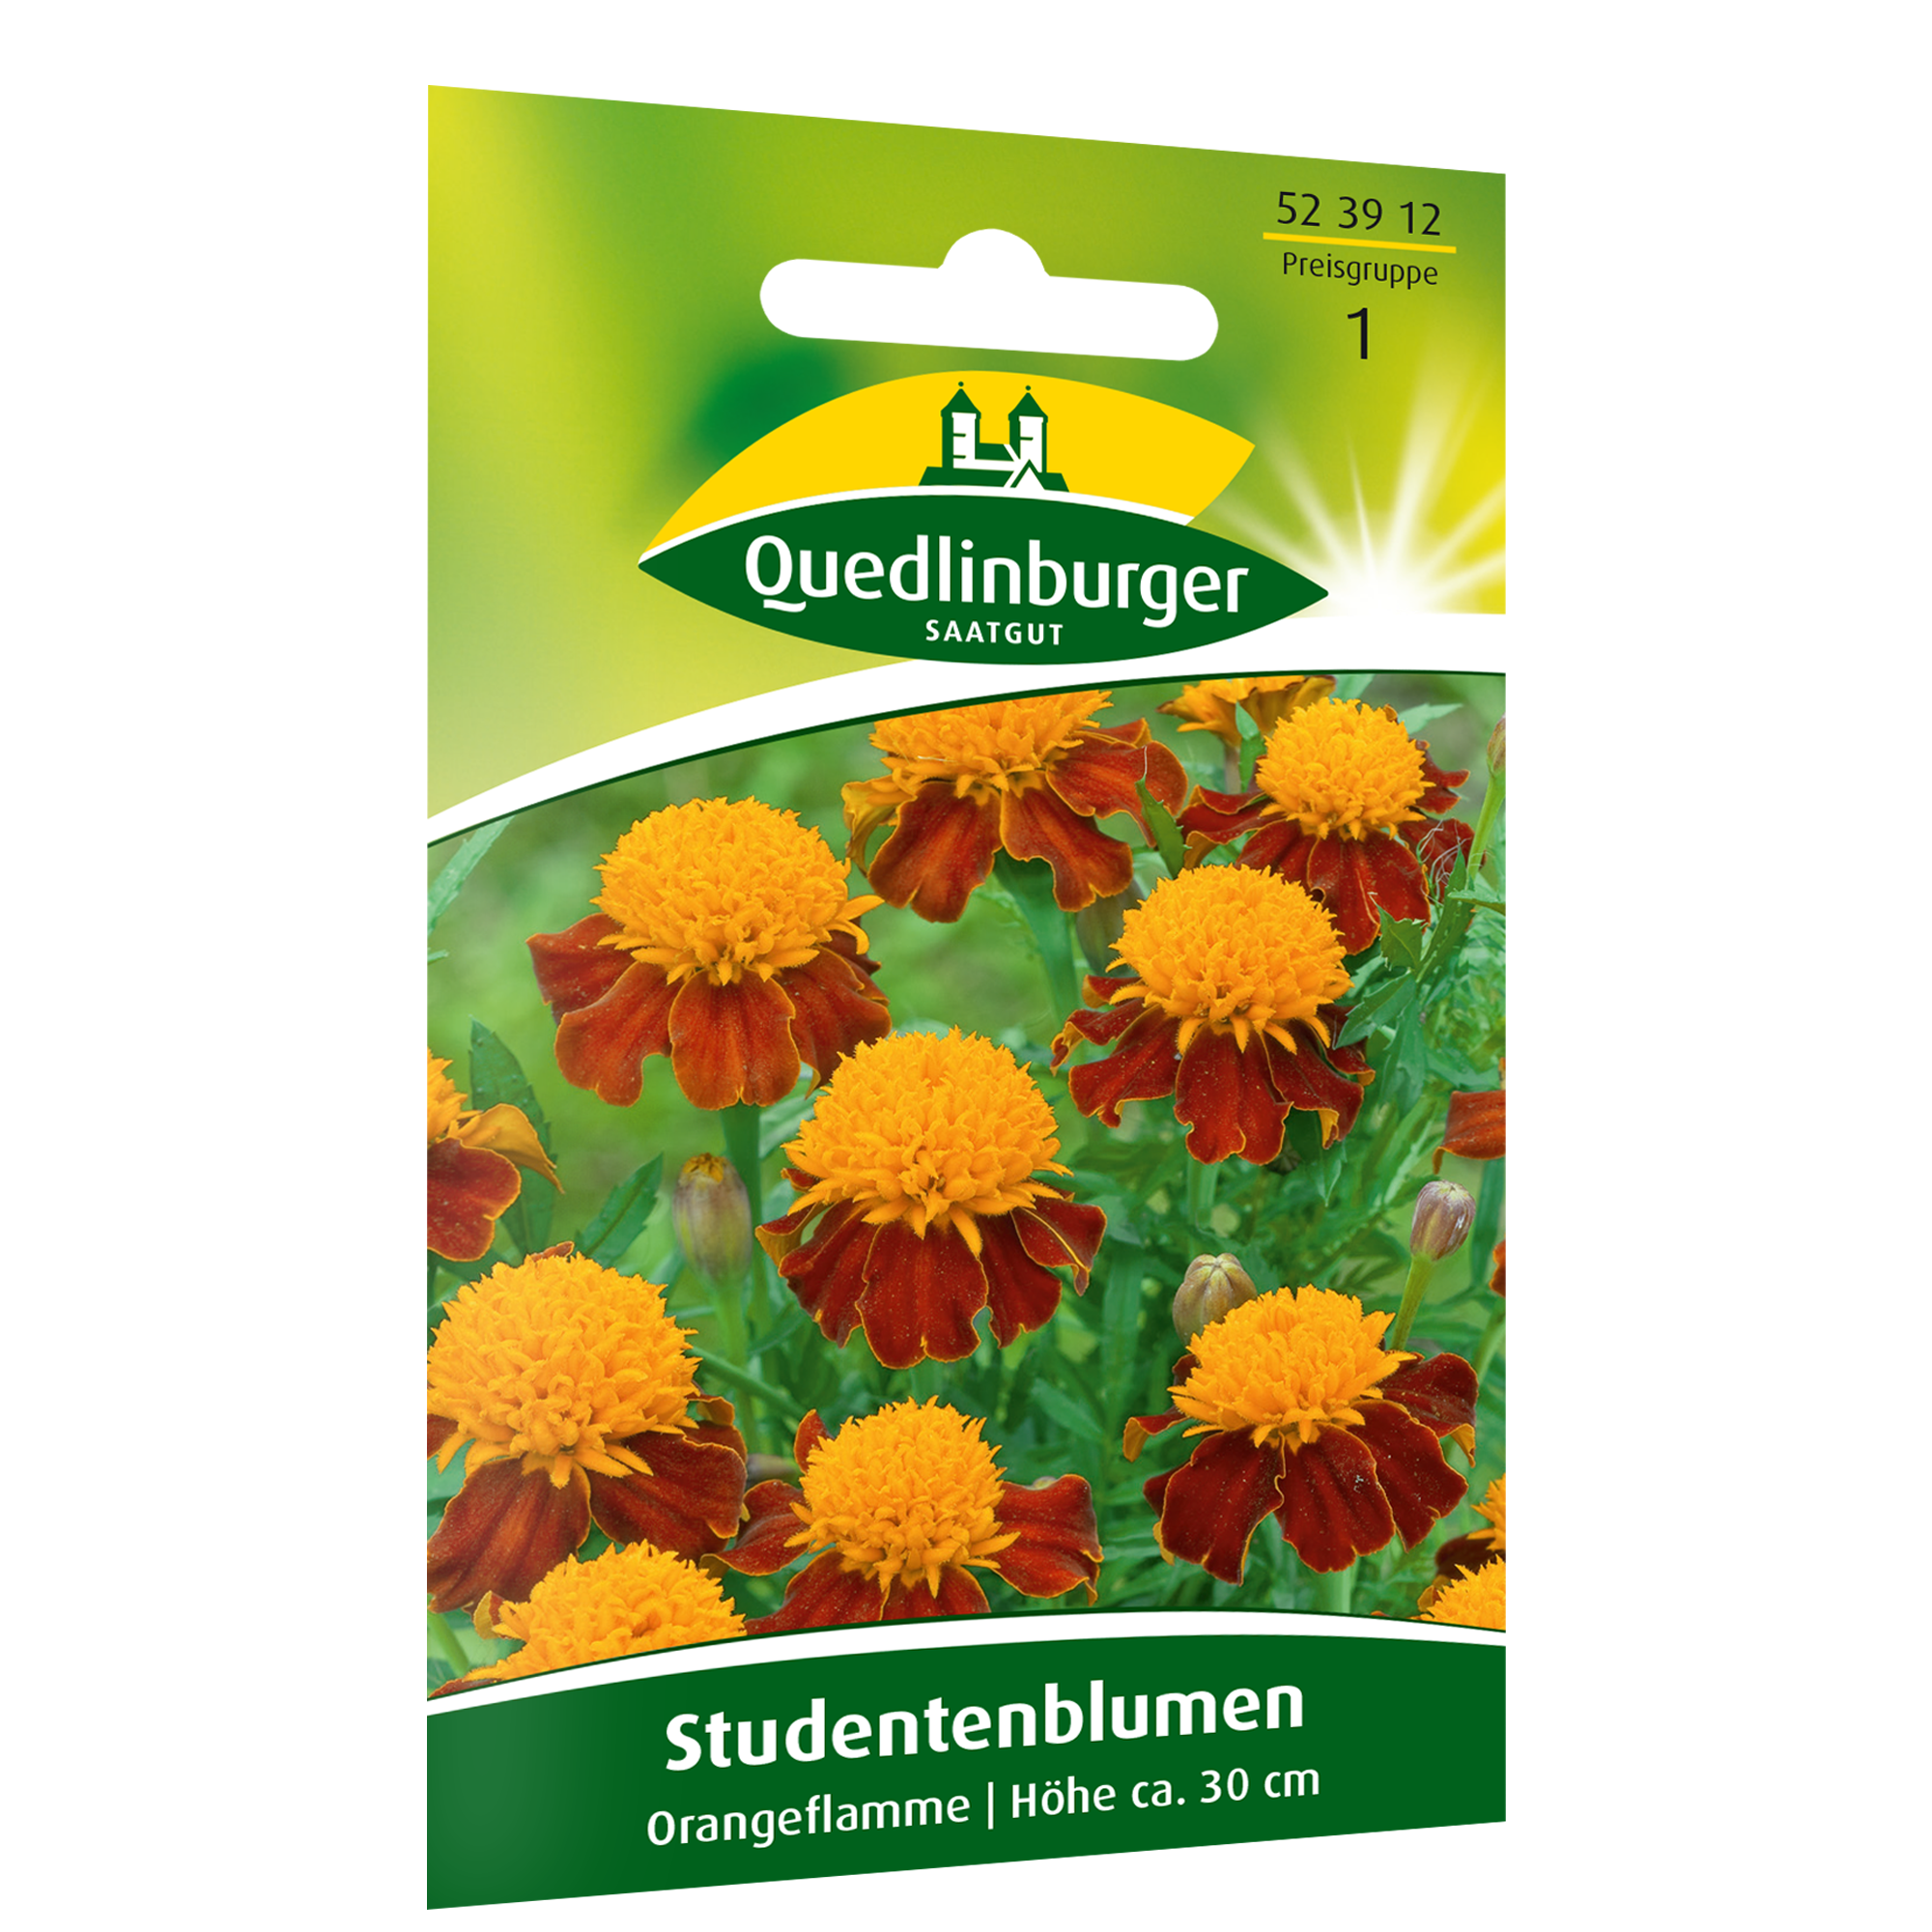 Studentenblumen 'Orangeflamme' + product picture